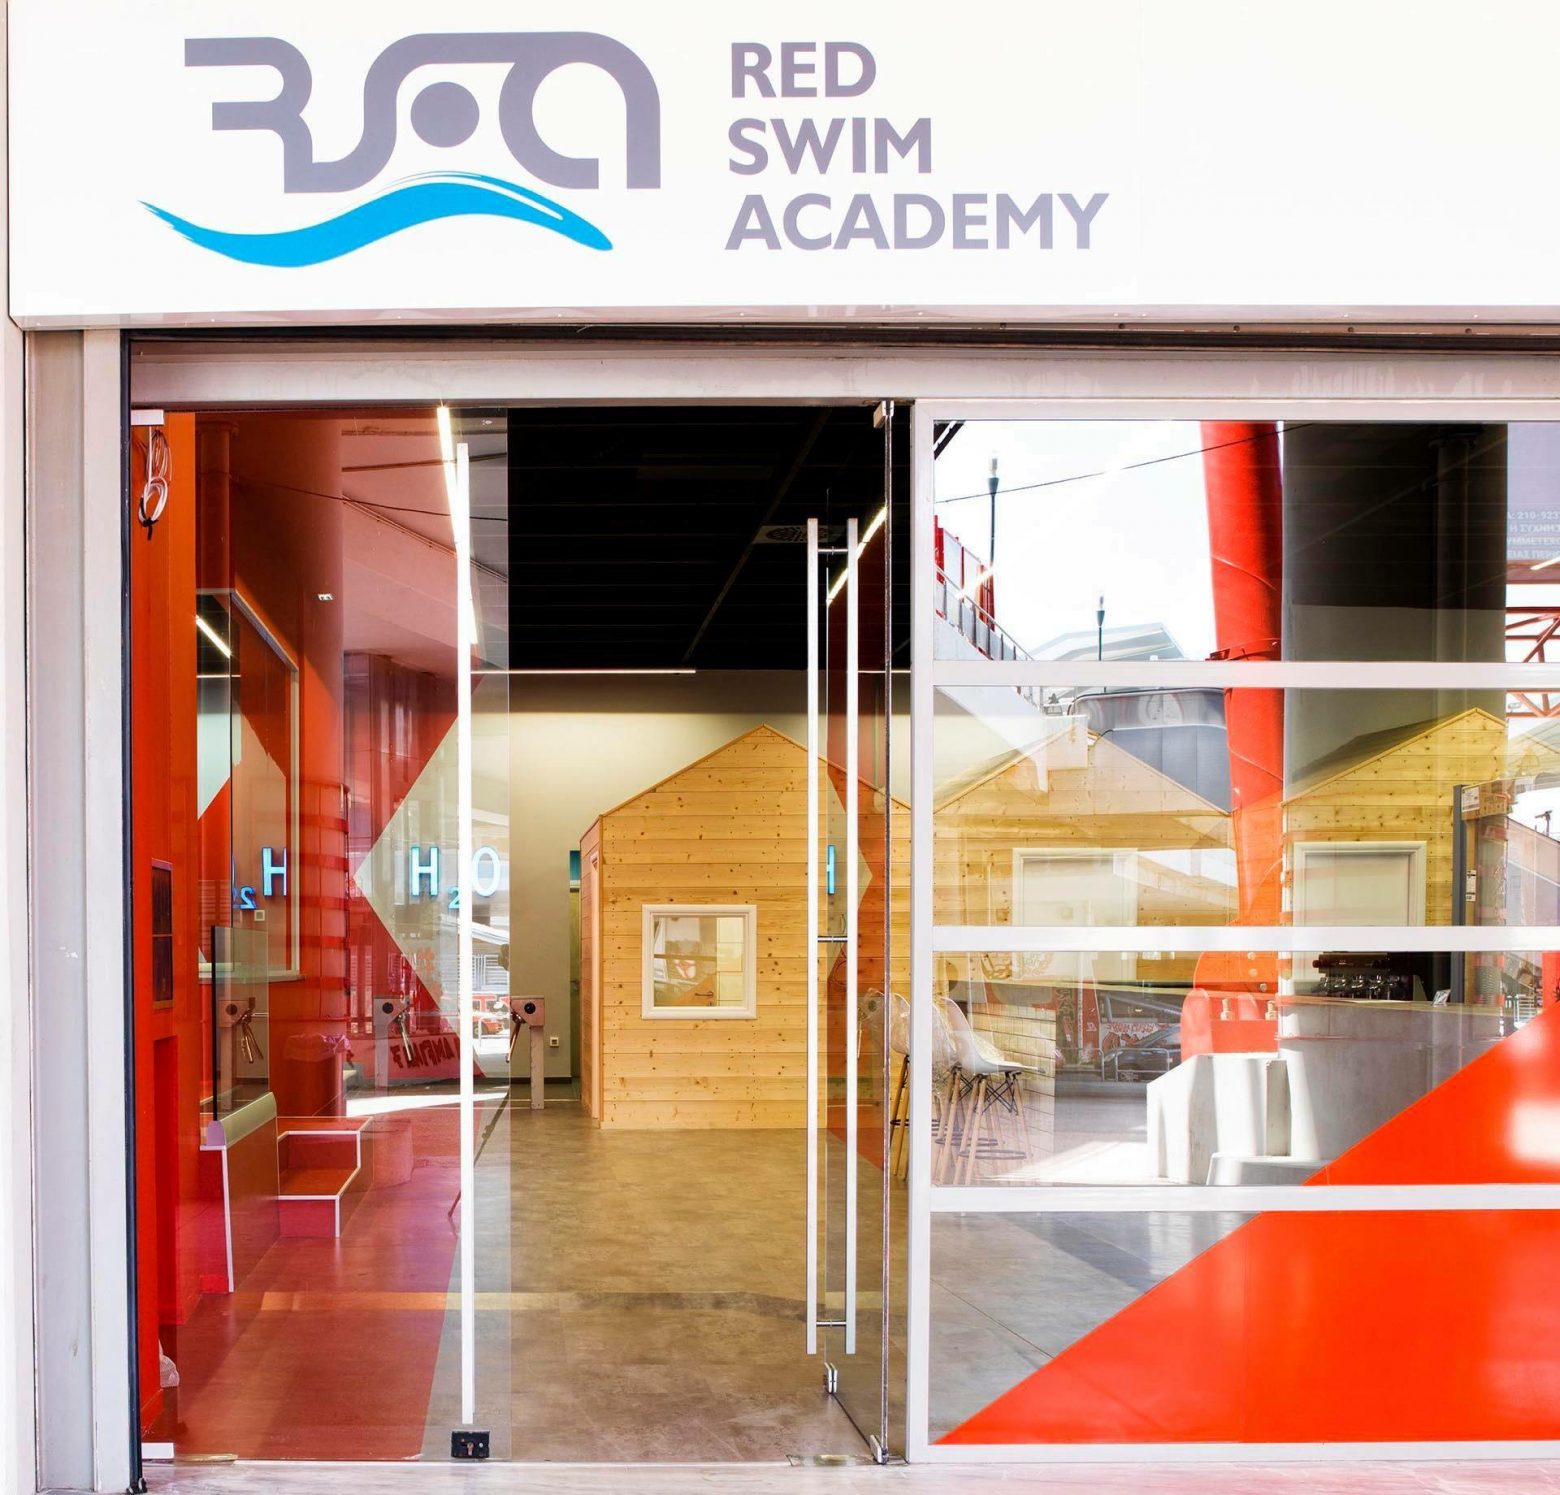 Red Swim Academy - Άνοιξε τις πόρτες του - Ποια νέα προγράμματα είναι διαθέσιμα